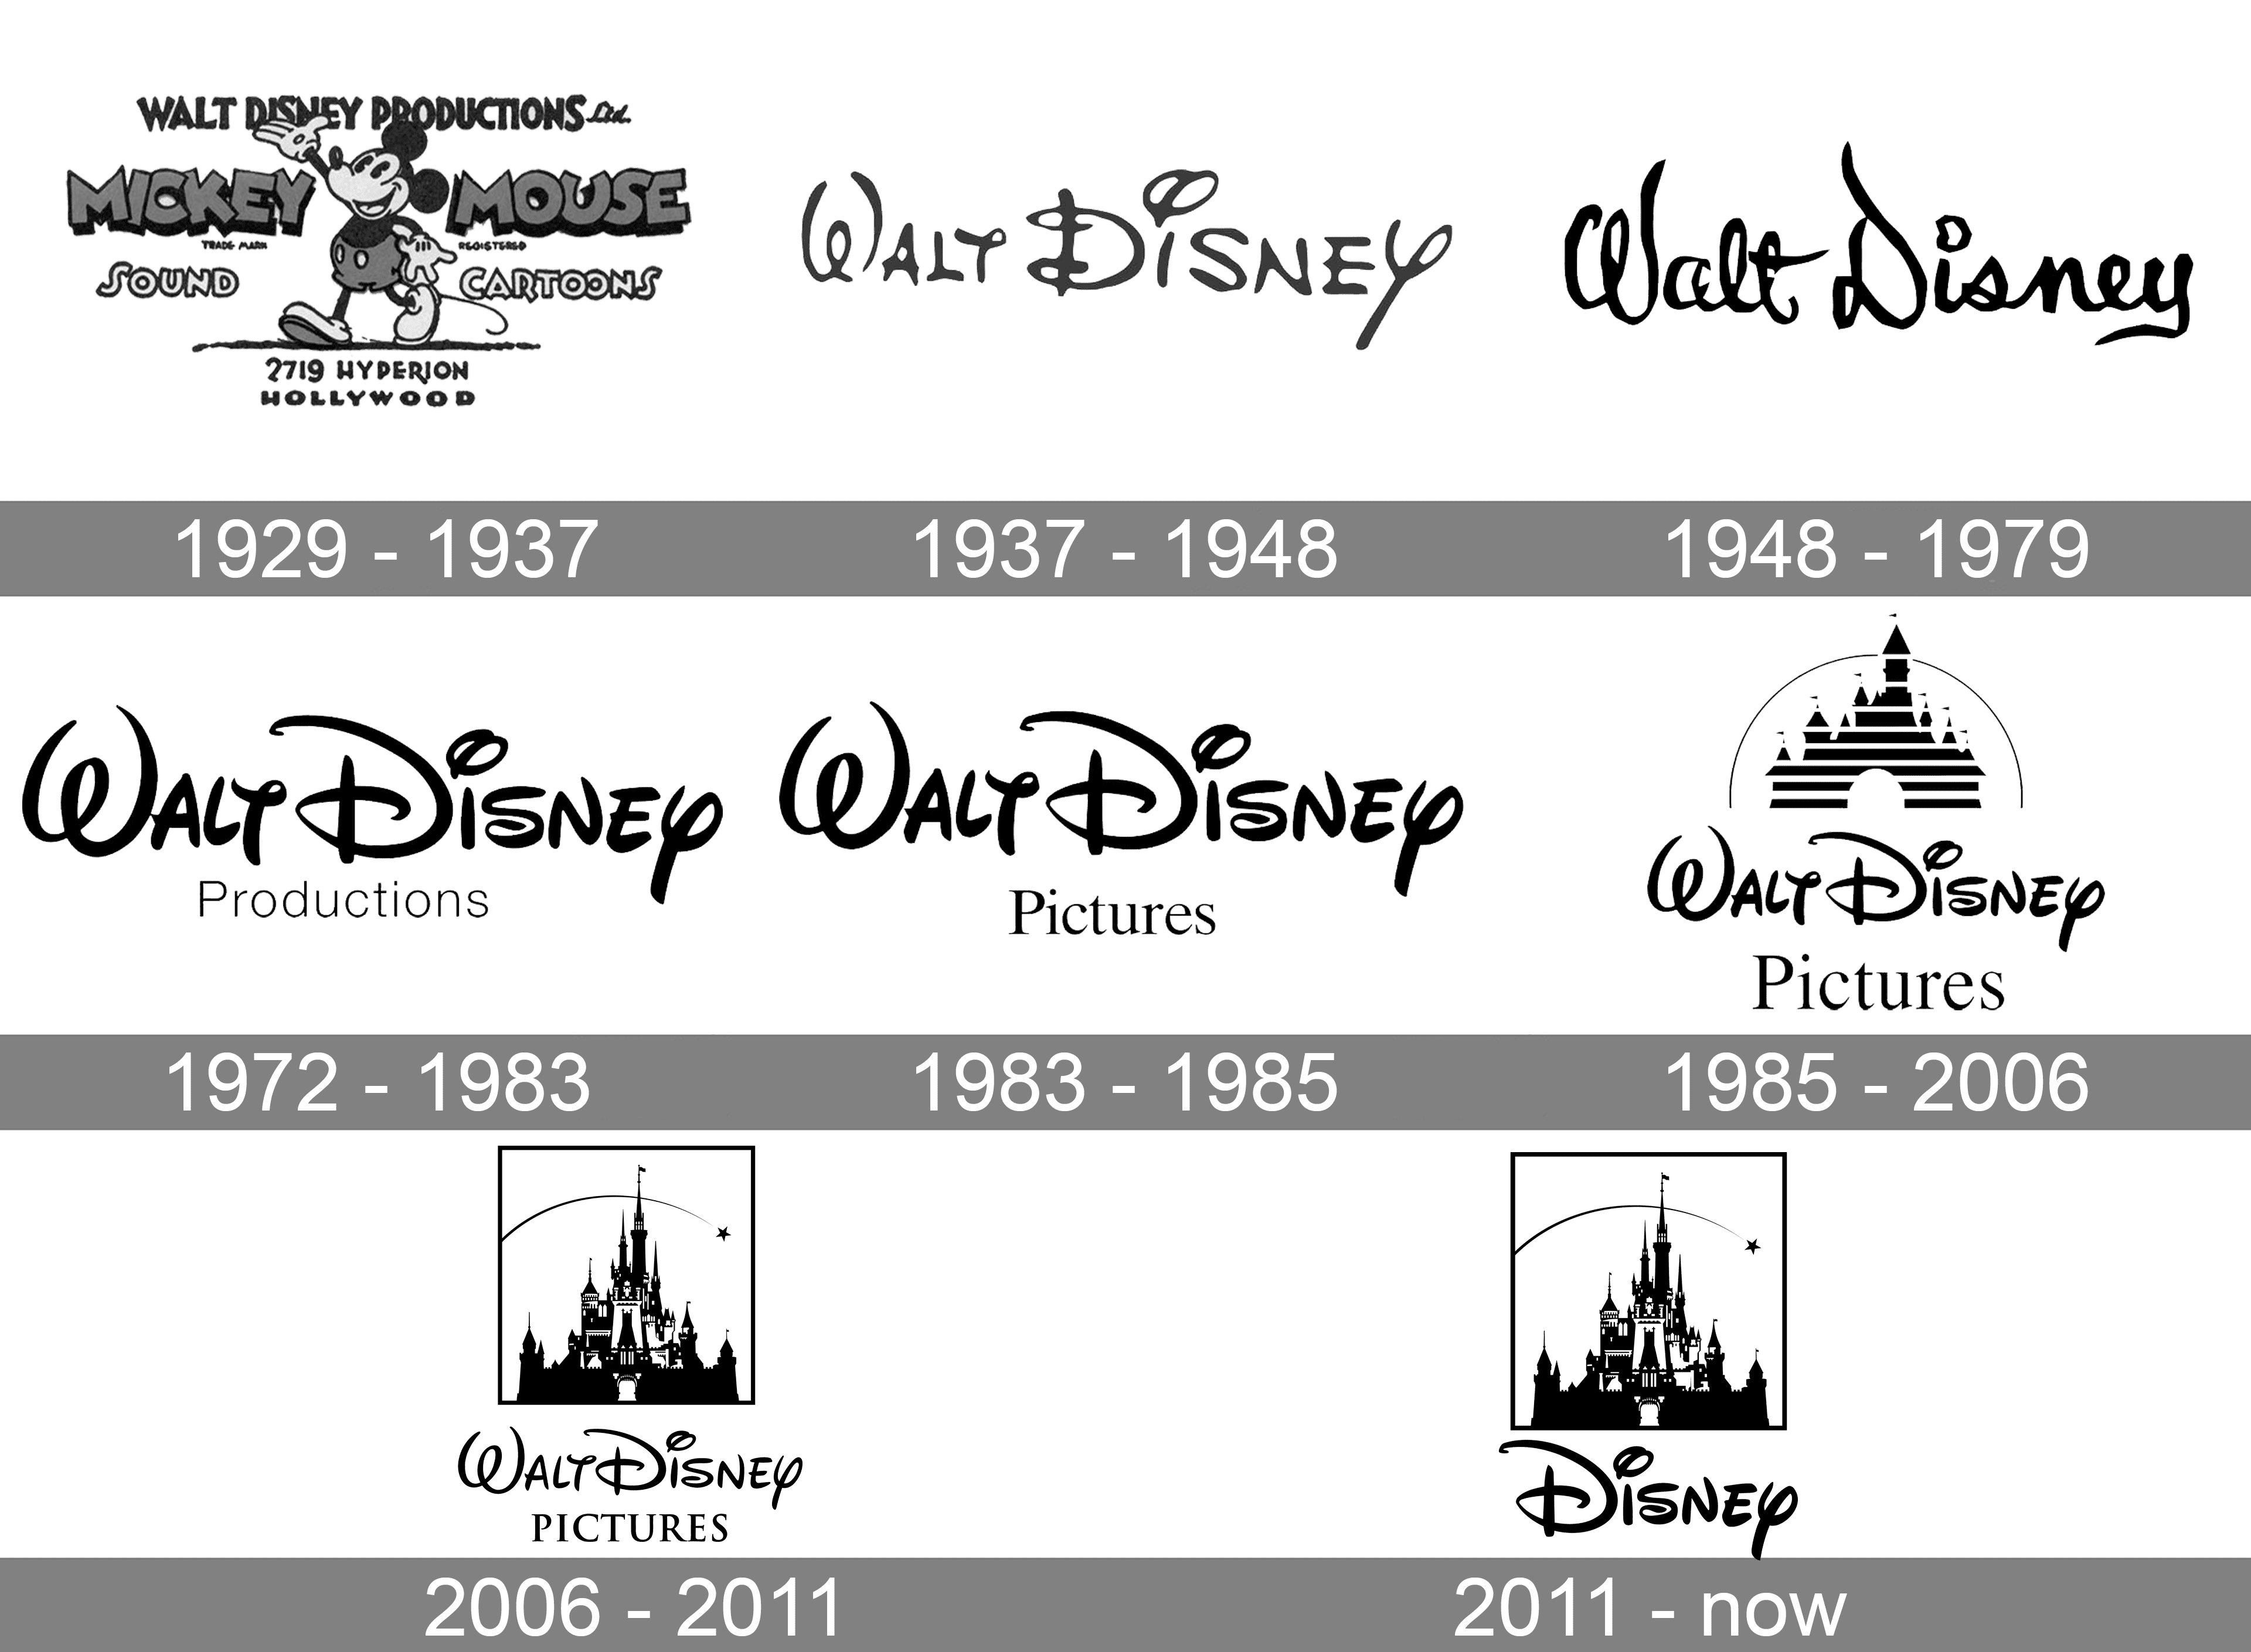 The Walt Disney Company: Celebrating 100 Years of Magical